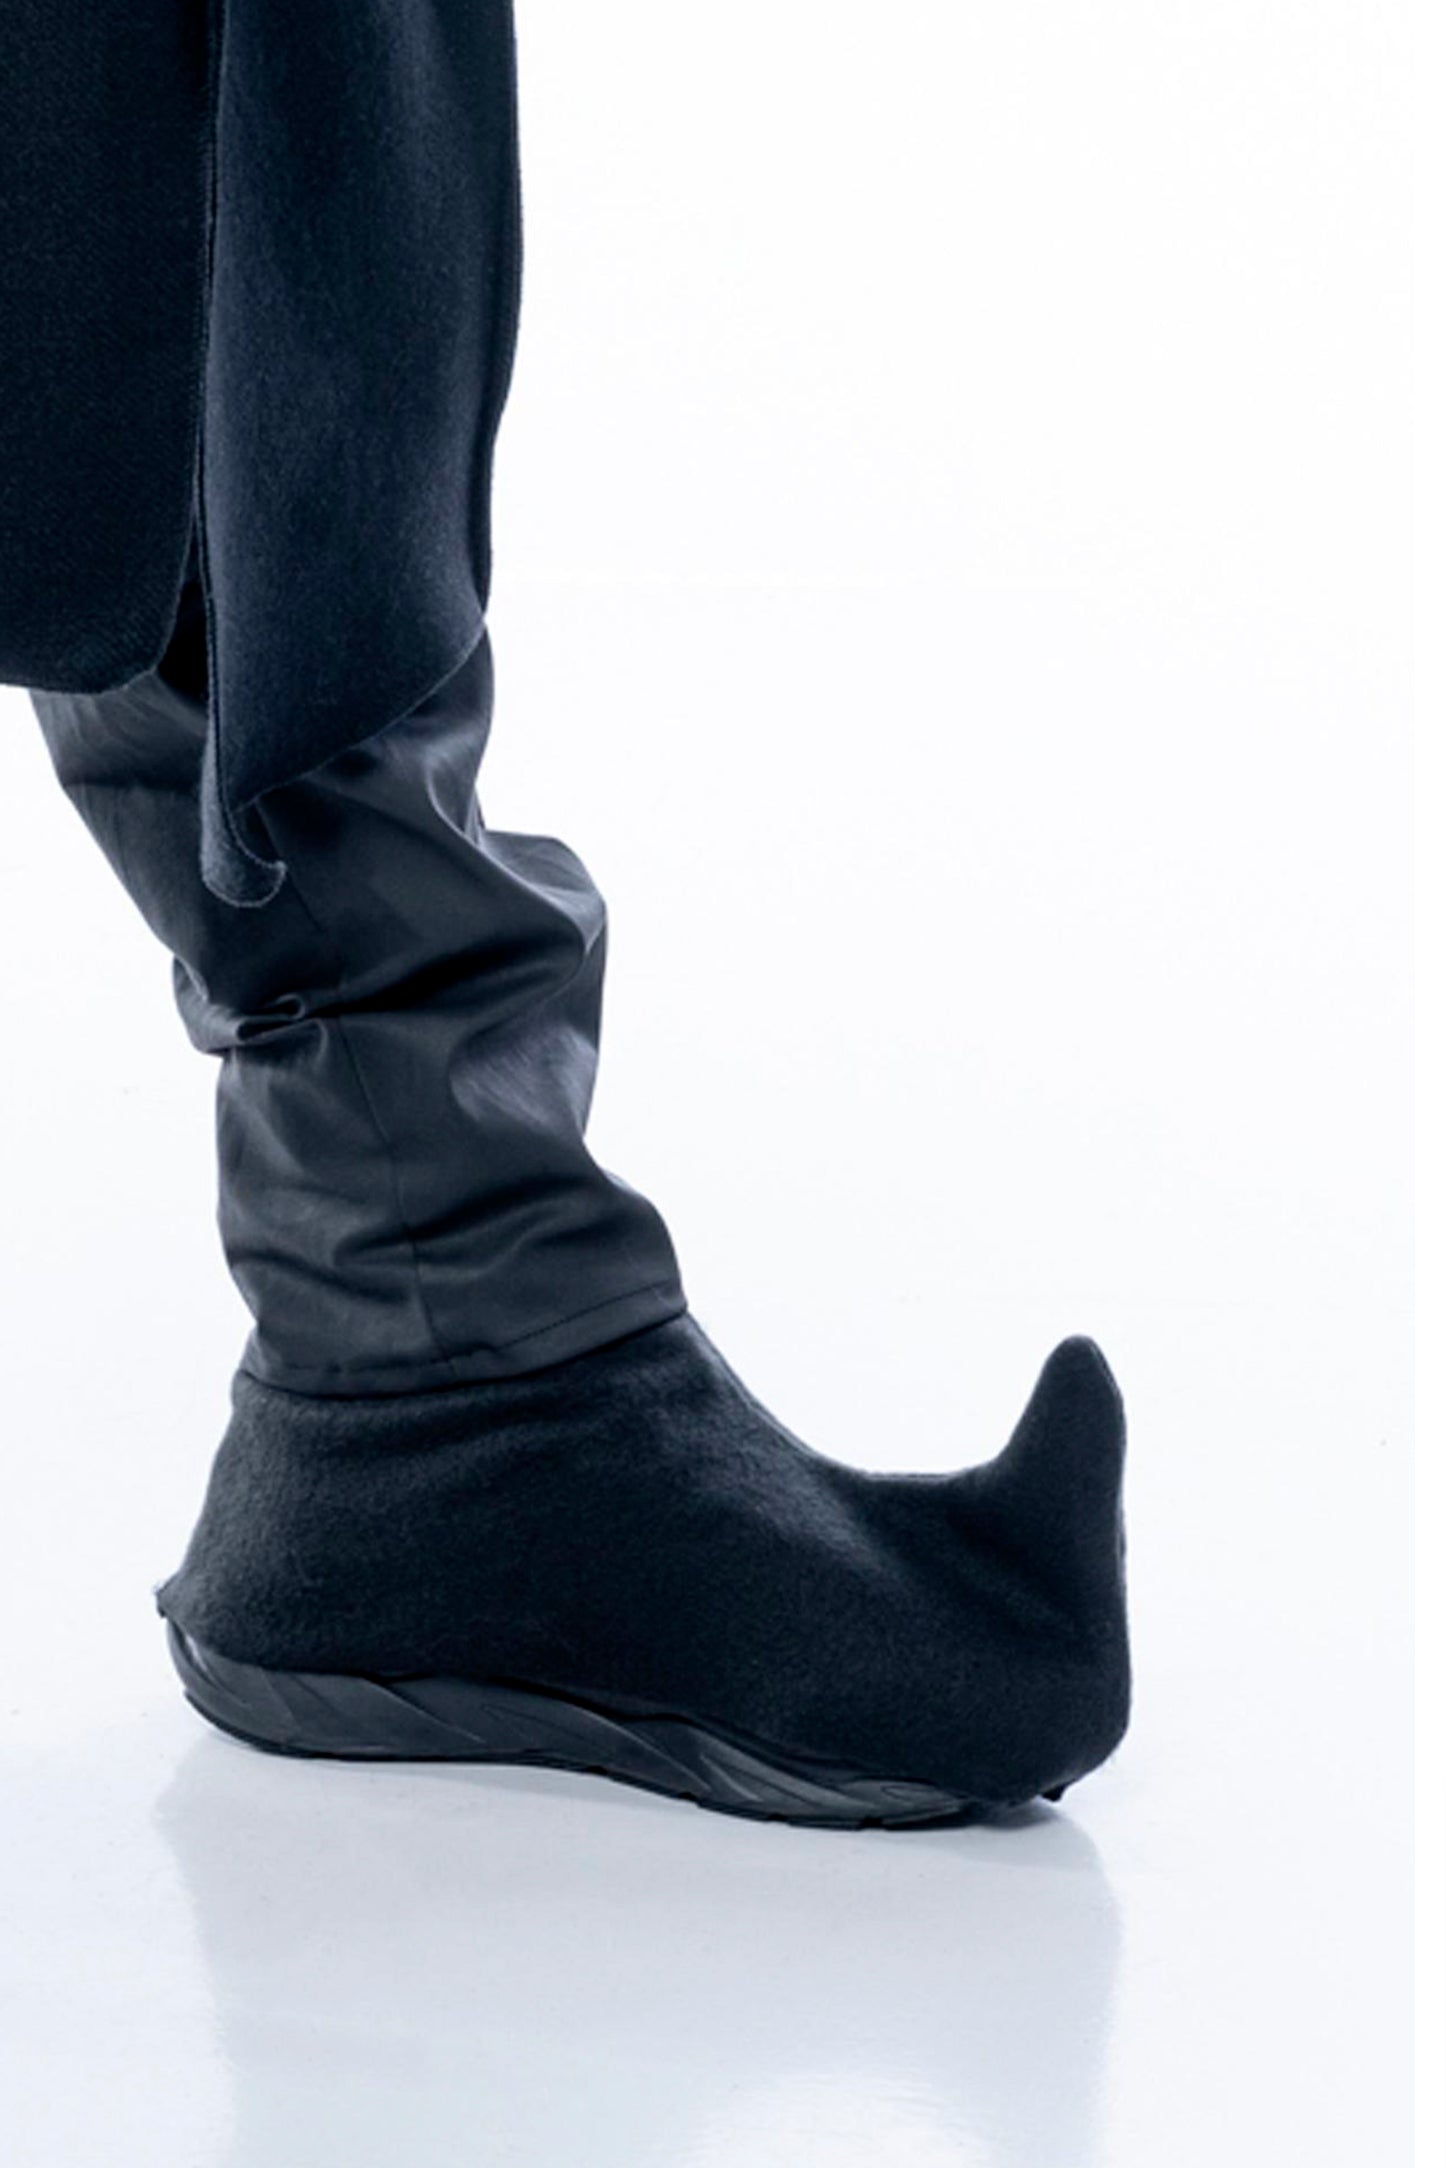 UNICORN boot socks